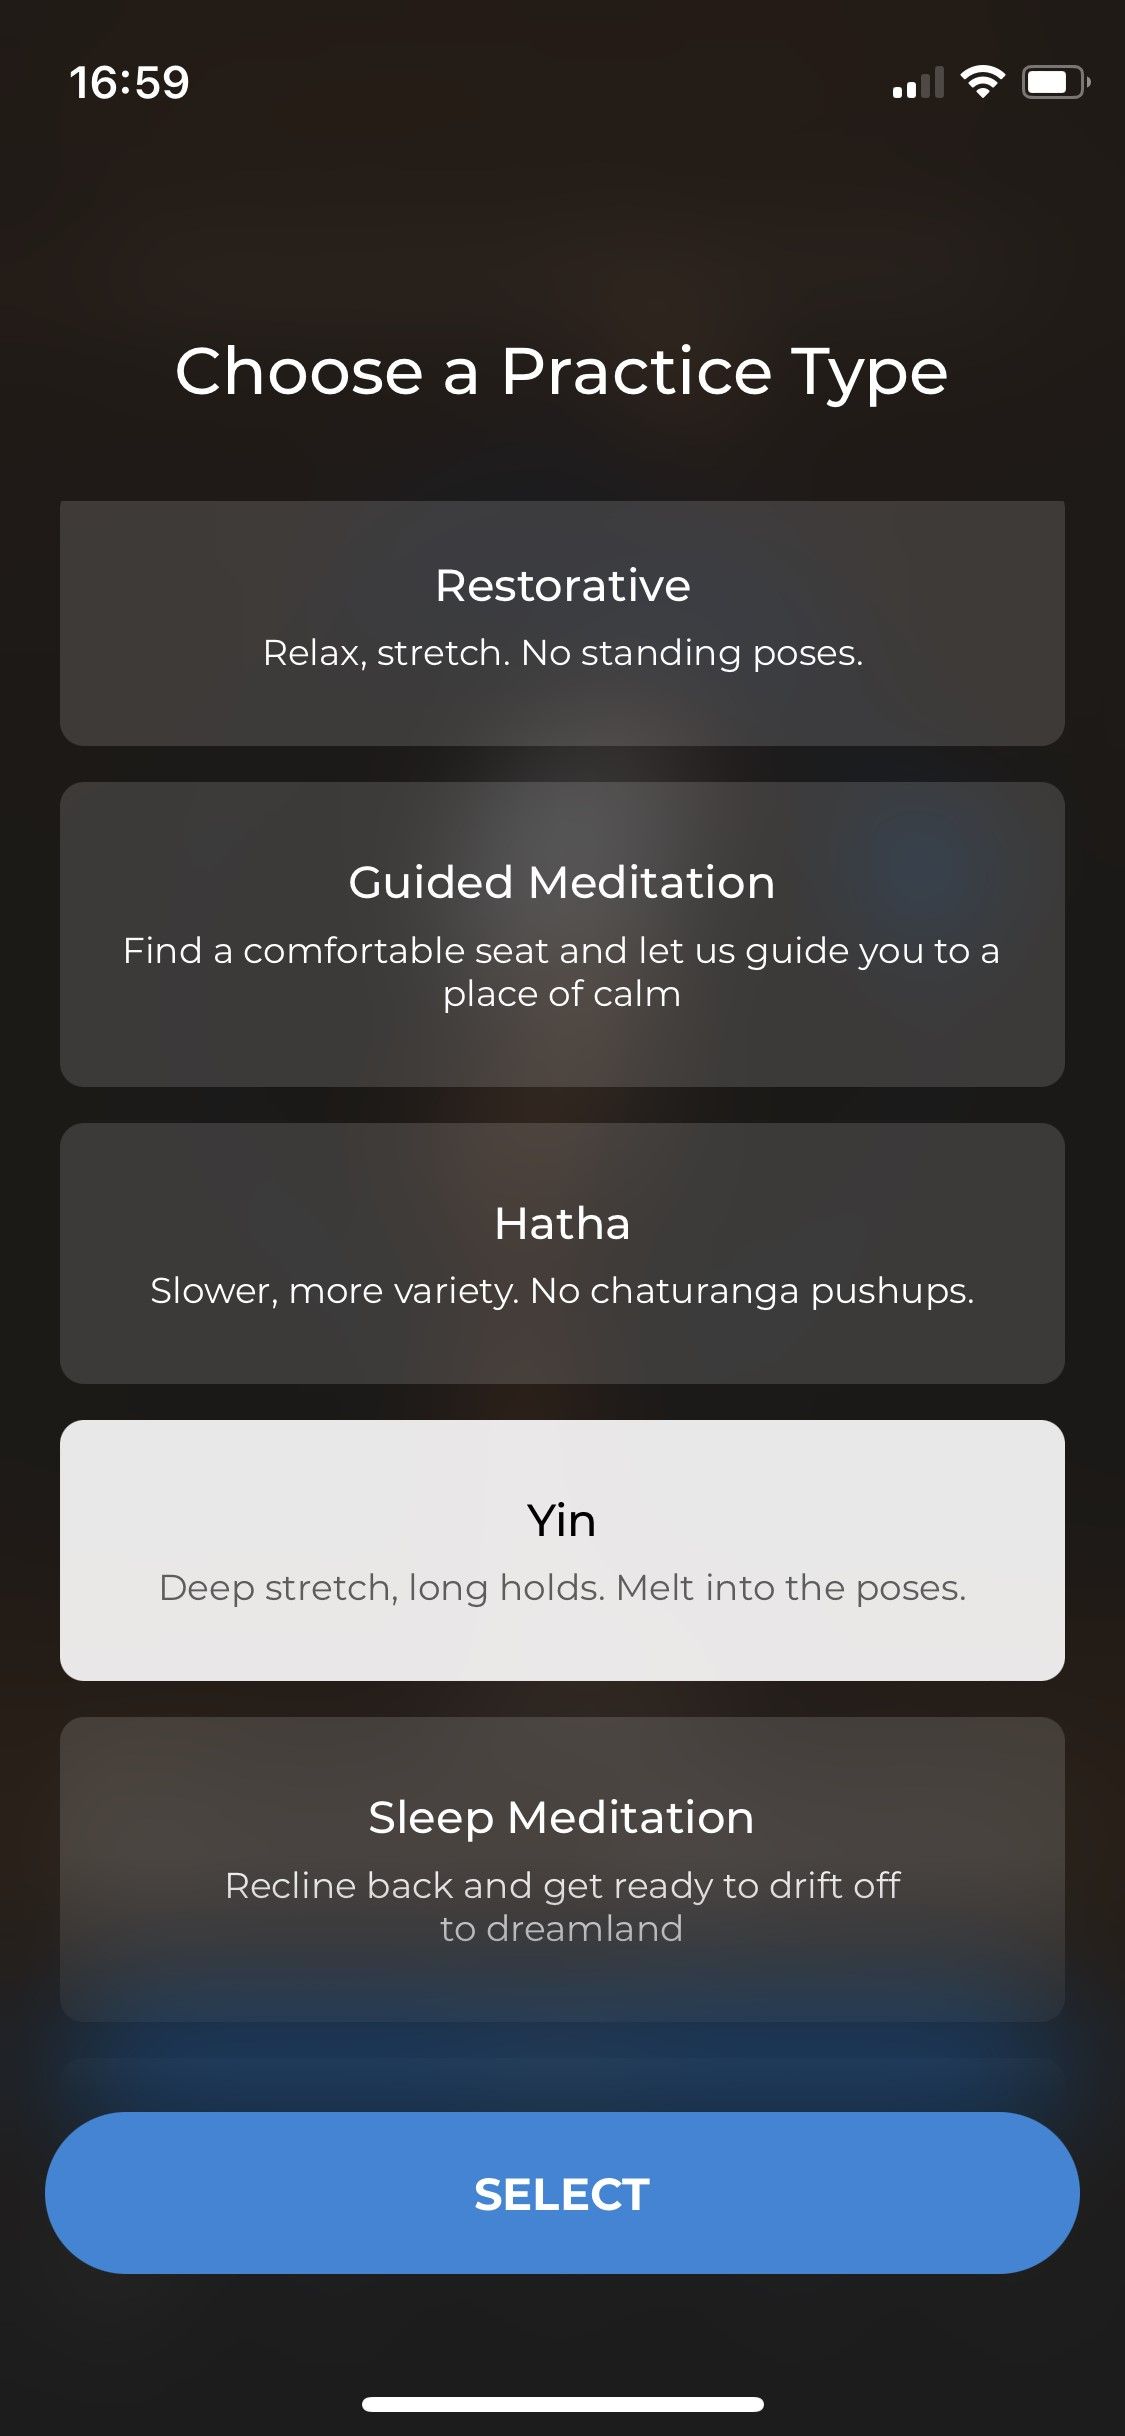 DownDog Yoga app - choose Yin yoga for anemia